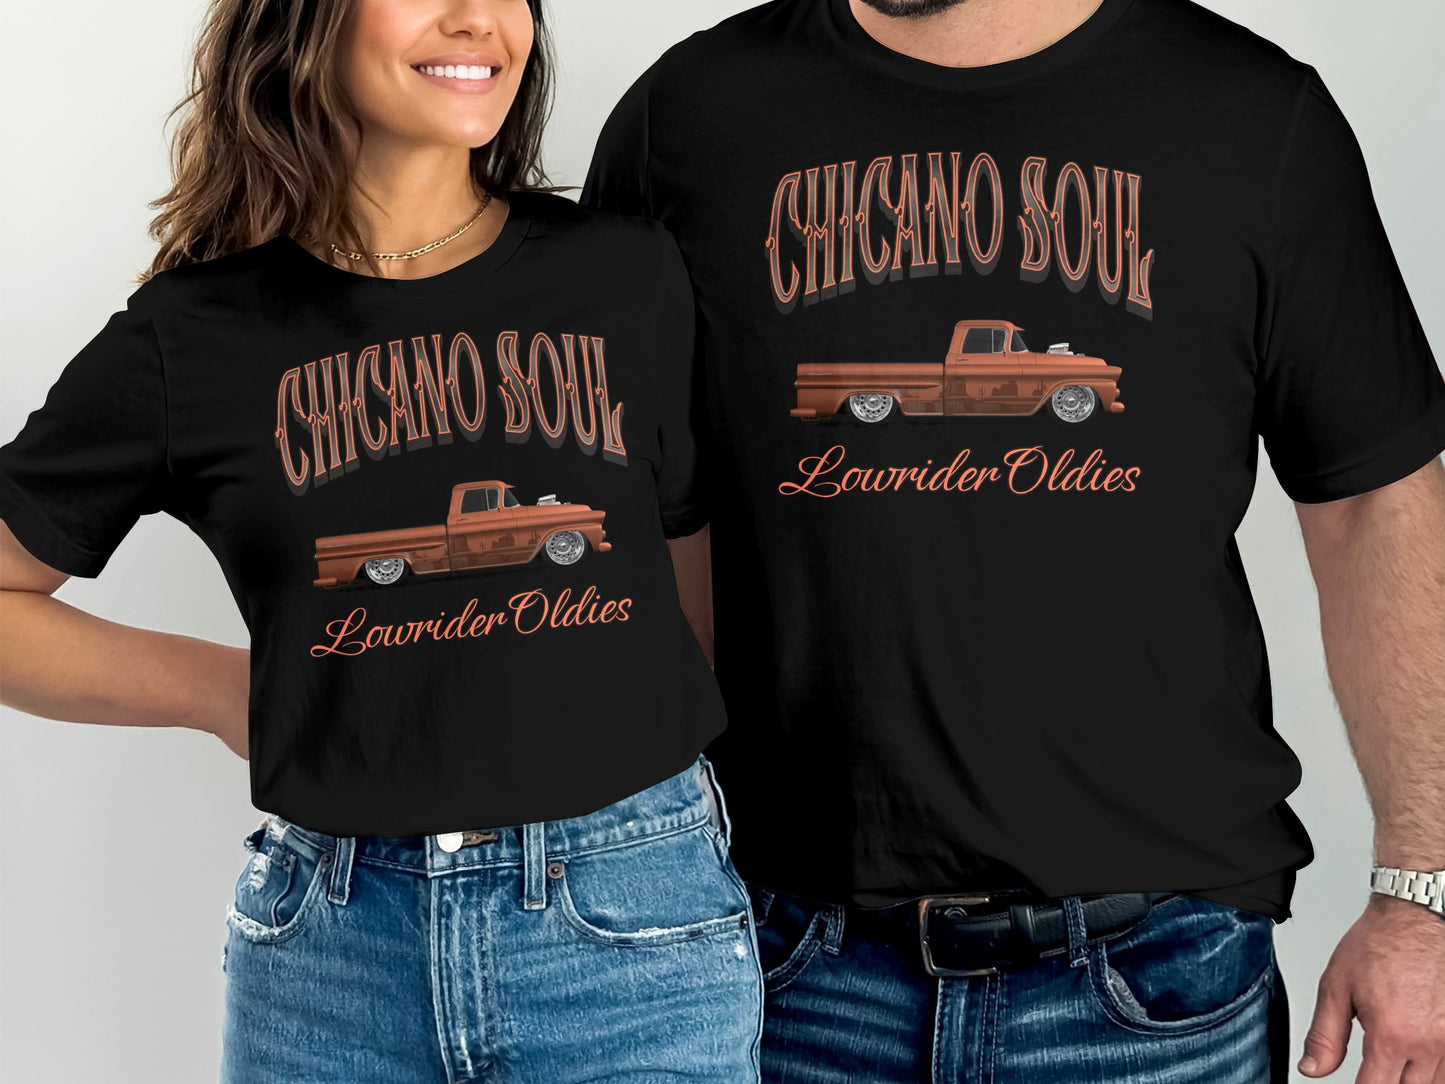 Chicano Soul Lowrider Oldies Vintage Truck Graphic Tee, Classic Car T-Shirt, Retro Style Apparel - Mardonyx XS / Black